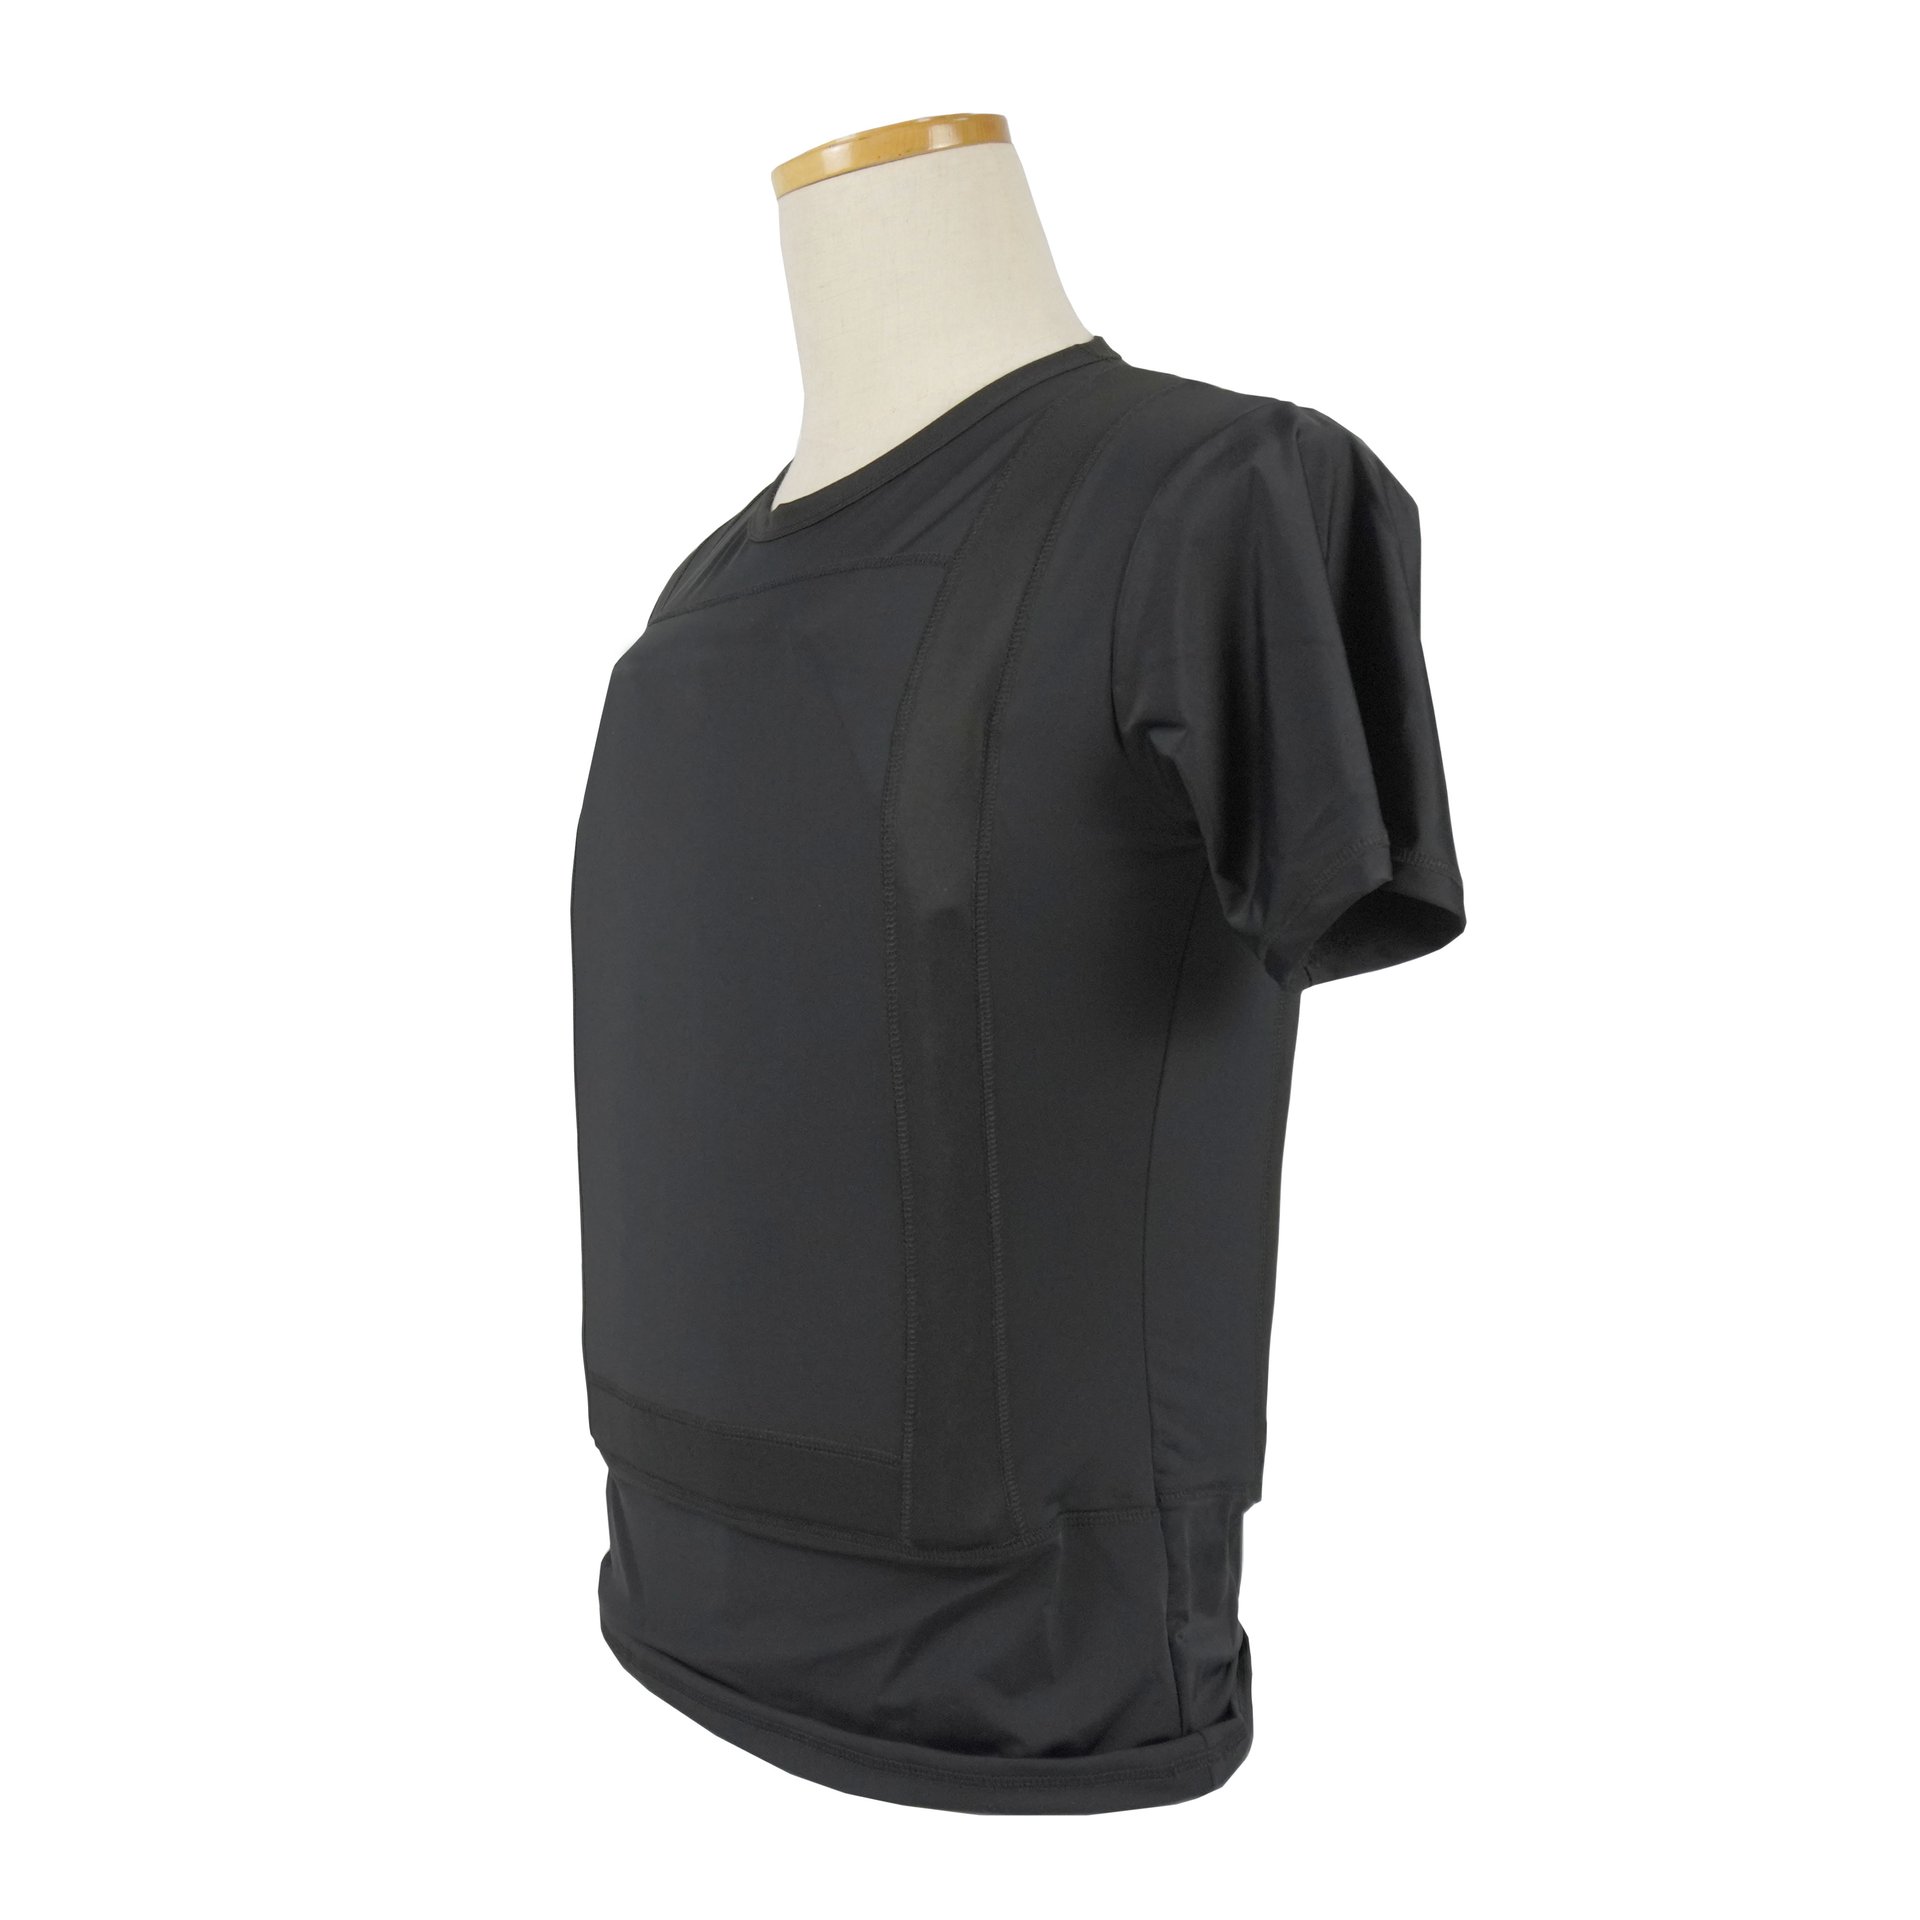 Wholesale Concealable Bulletsafe Body Armor Bulletproof Vest